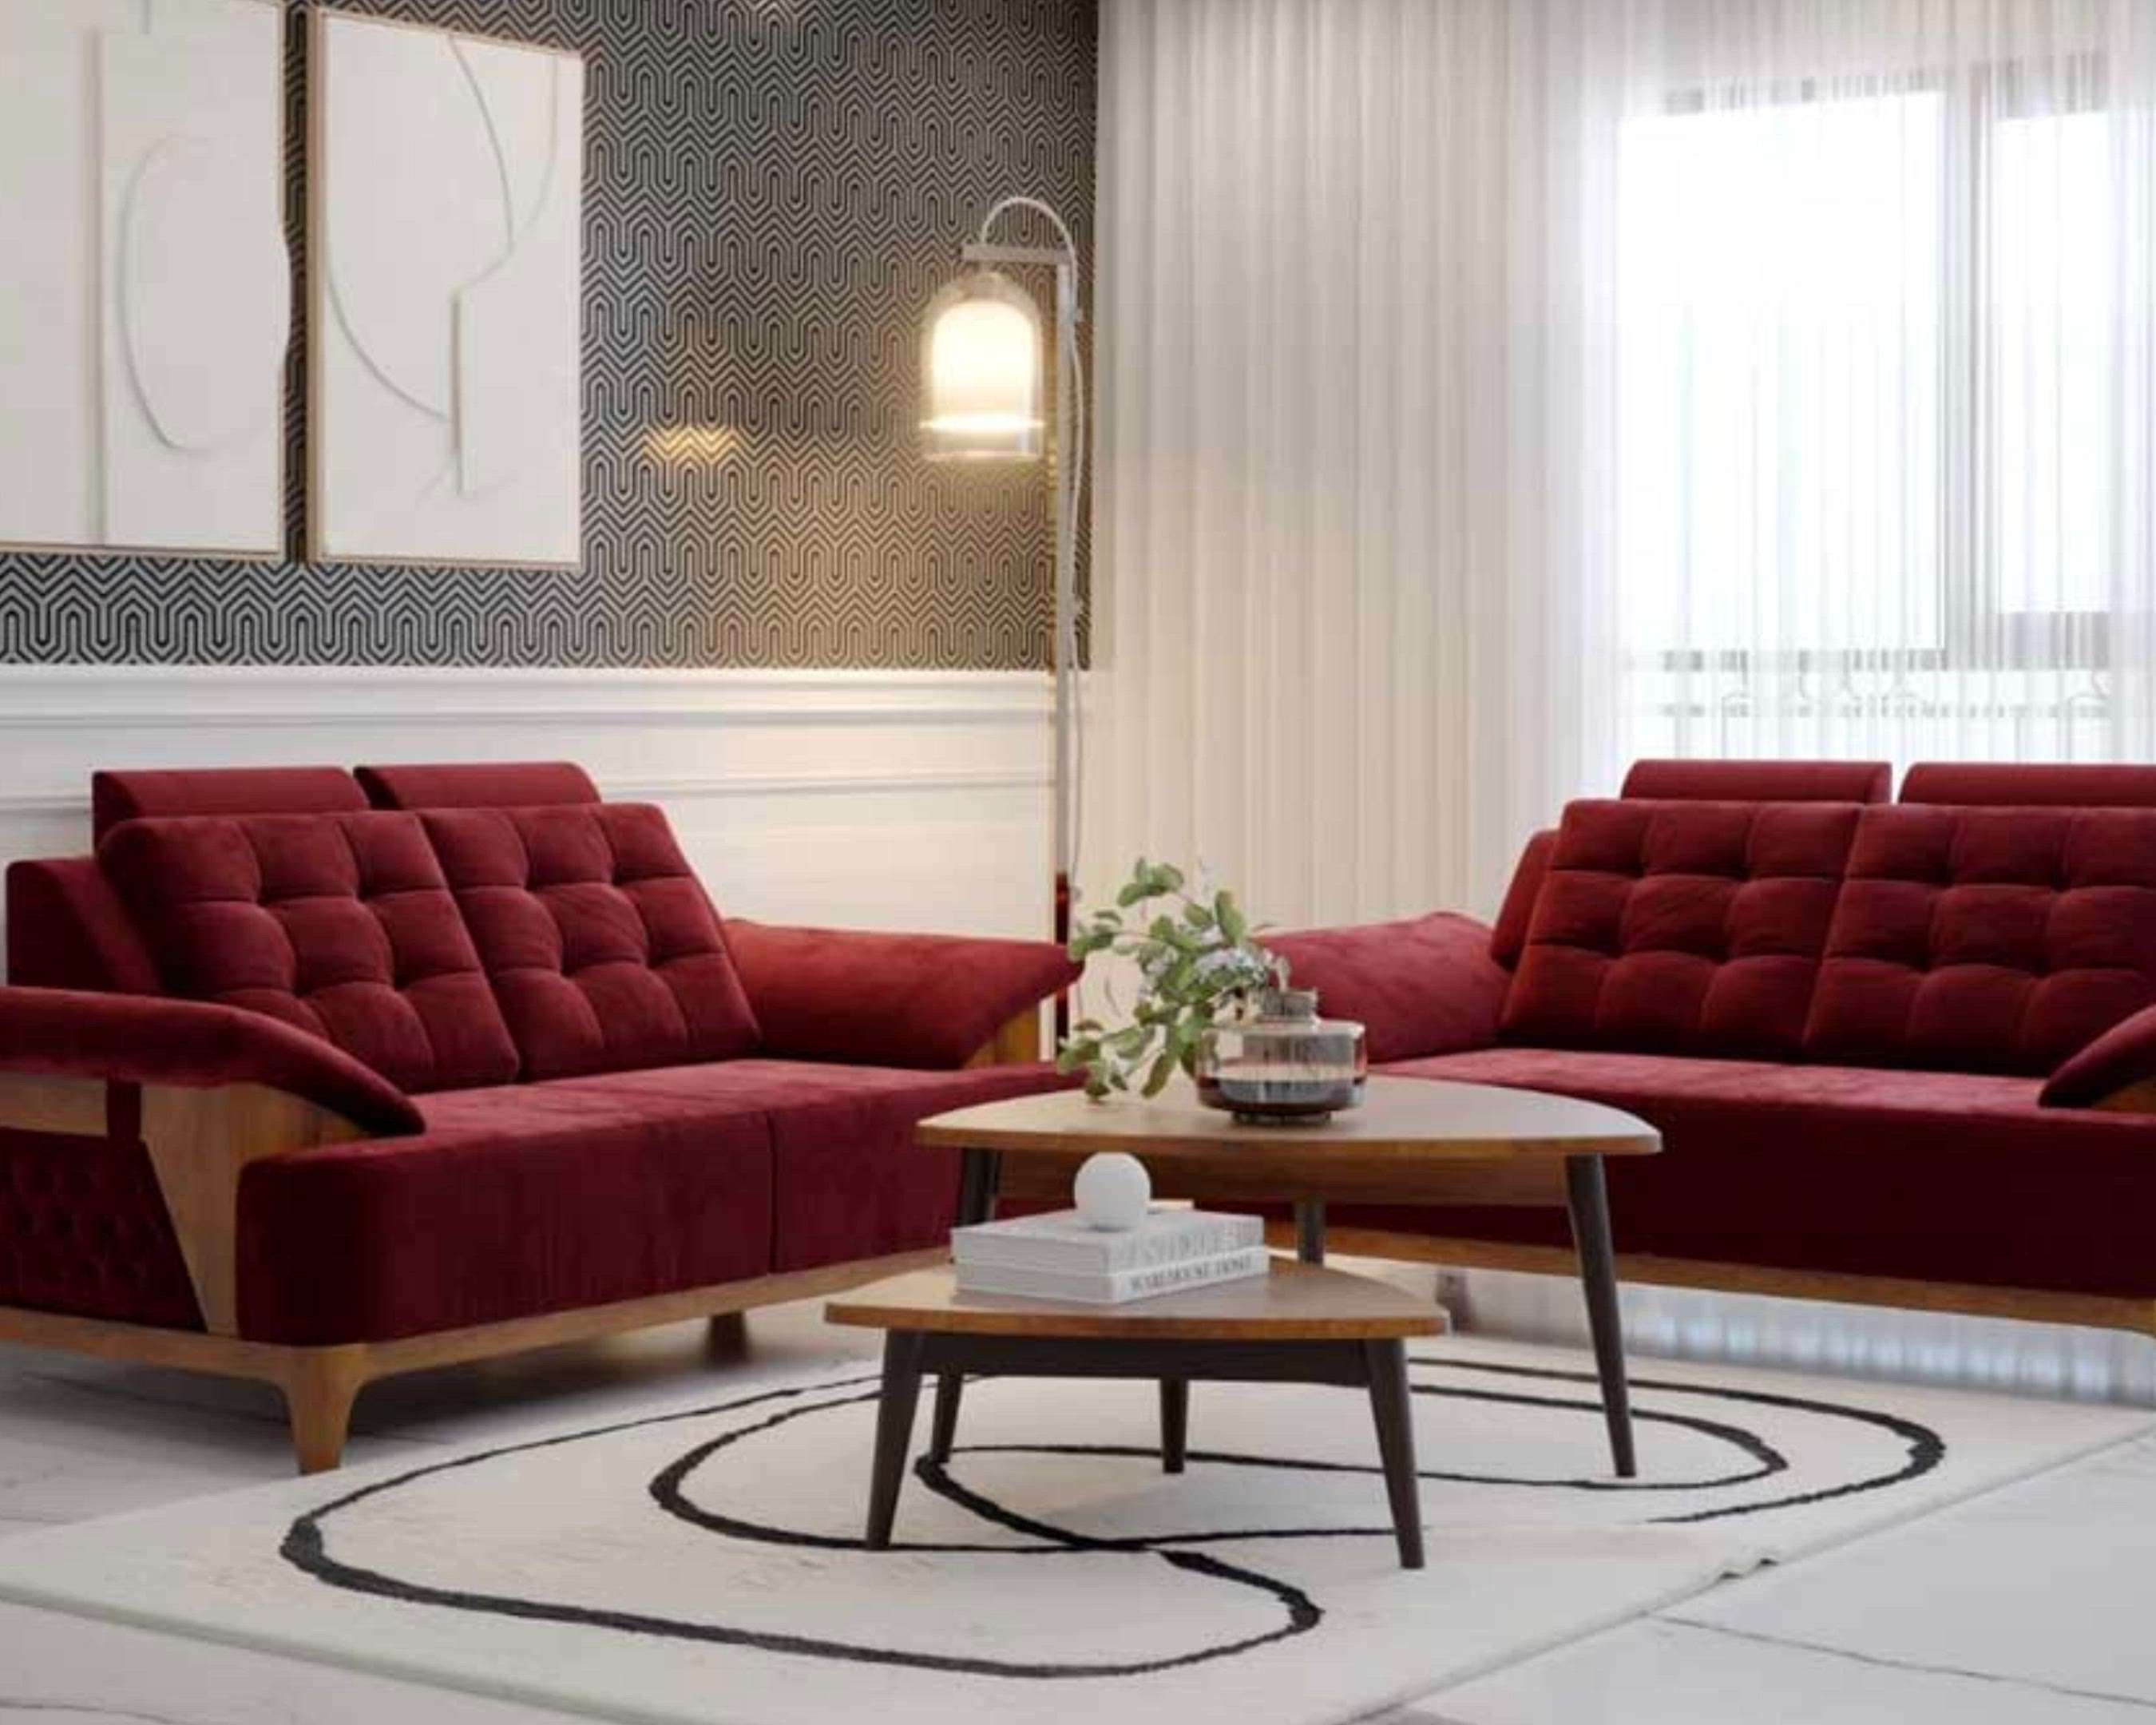 New arrival    #trendingdesign #NEW_SOFA #Sofas #LivingroomDesigns #DiningTable #MasterBedroom #BedroomIdeas